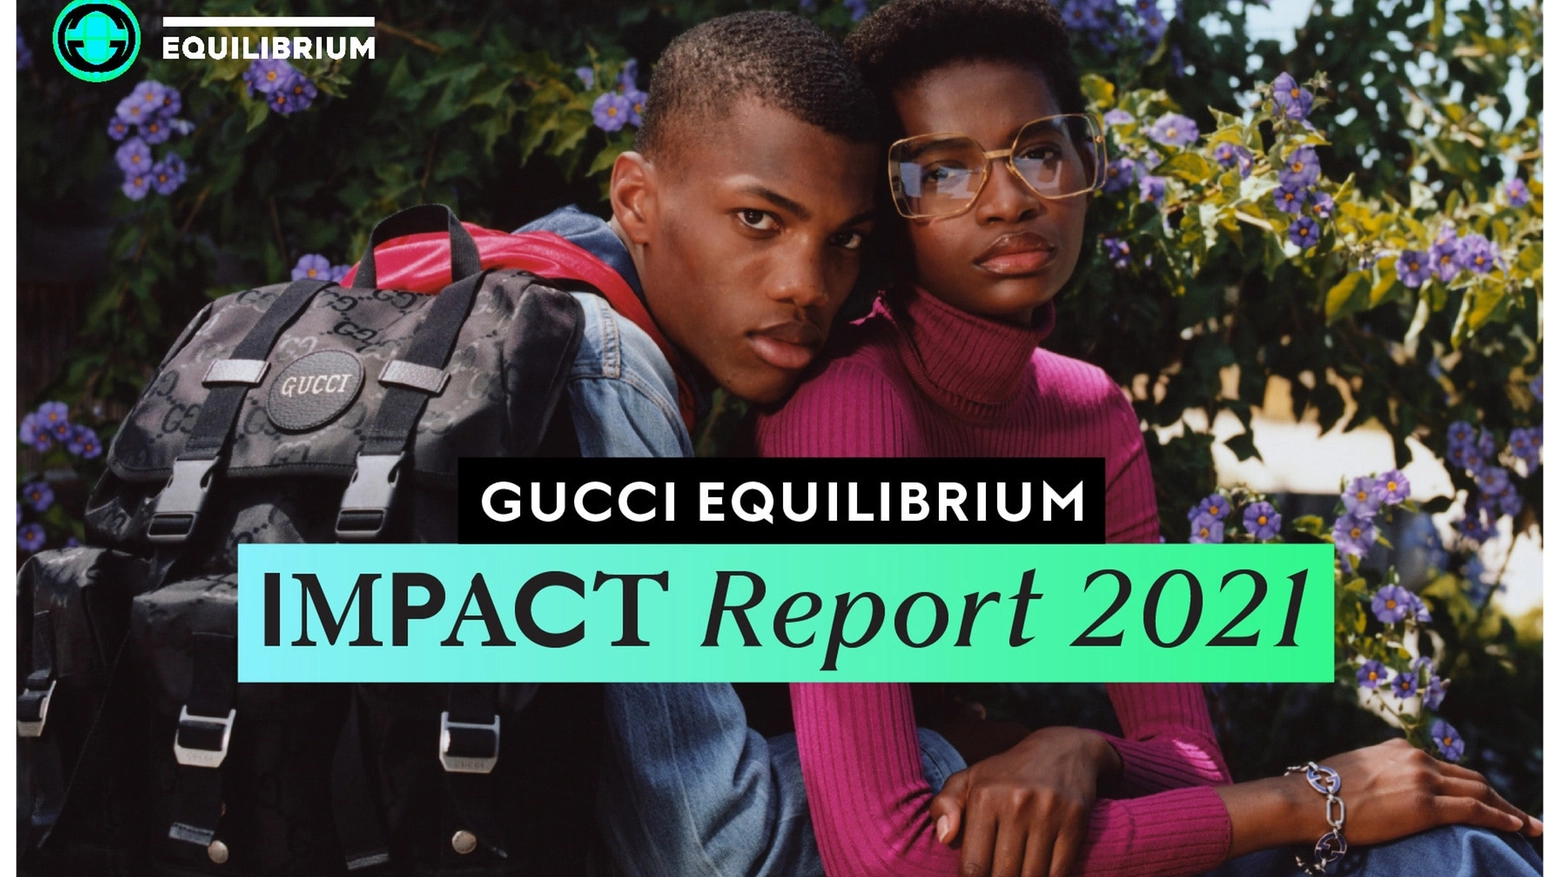 2021 Gucci Equilirium Impact Report cover